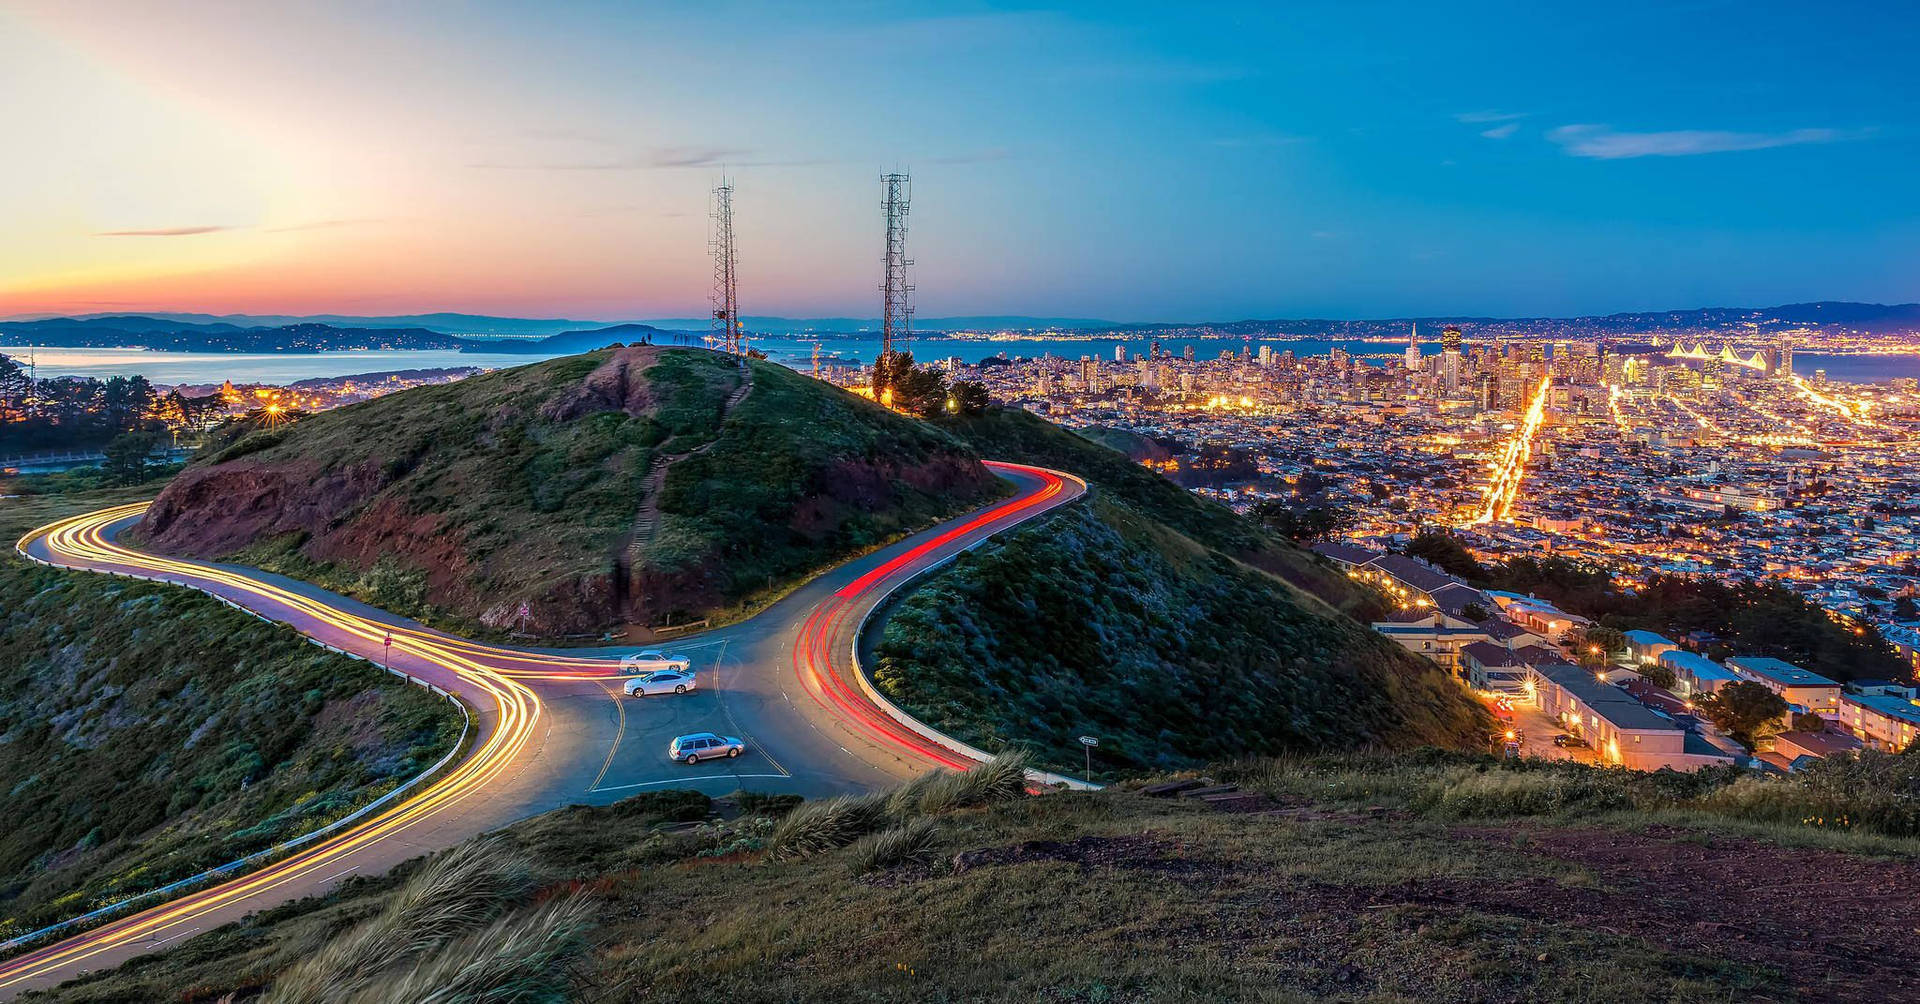 The Beauty Of San Francisco